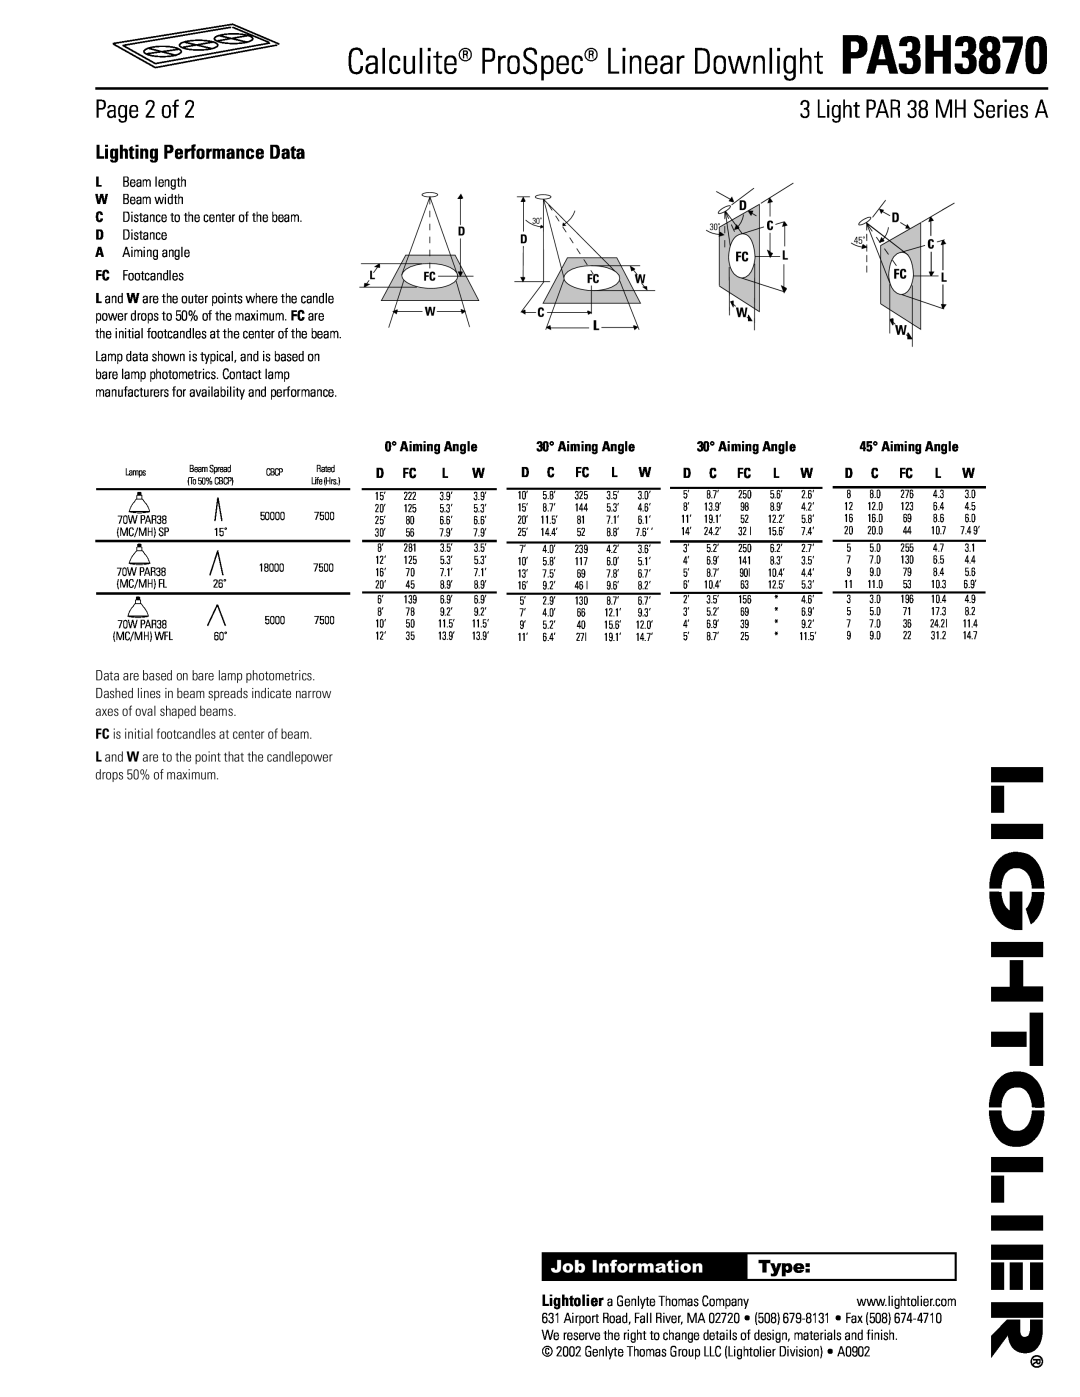 Lightolier Page 2 of, Lighting Performance Data, Calculite ProSpec Linear Downlight PA3H3870, Light PAR 38 MH Series A 